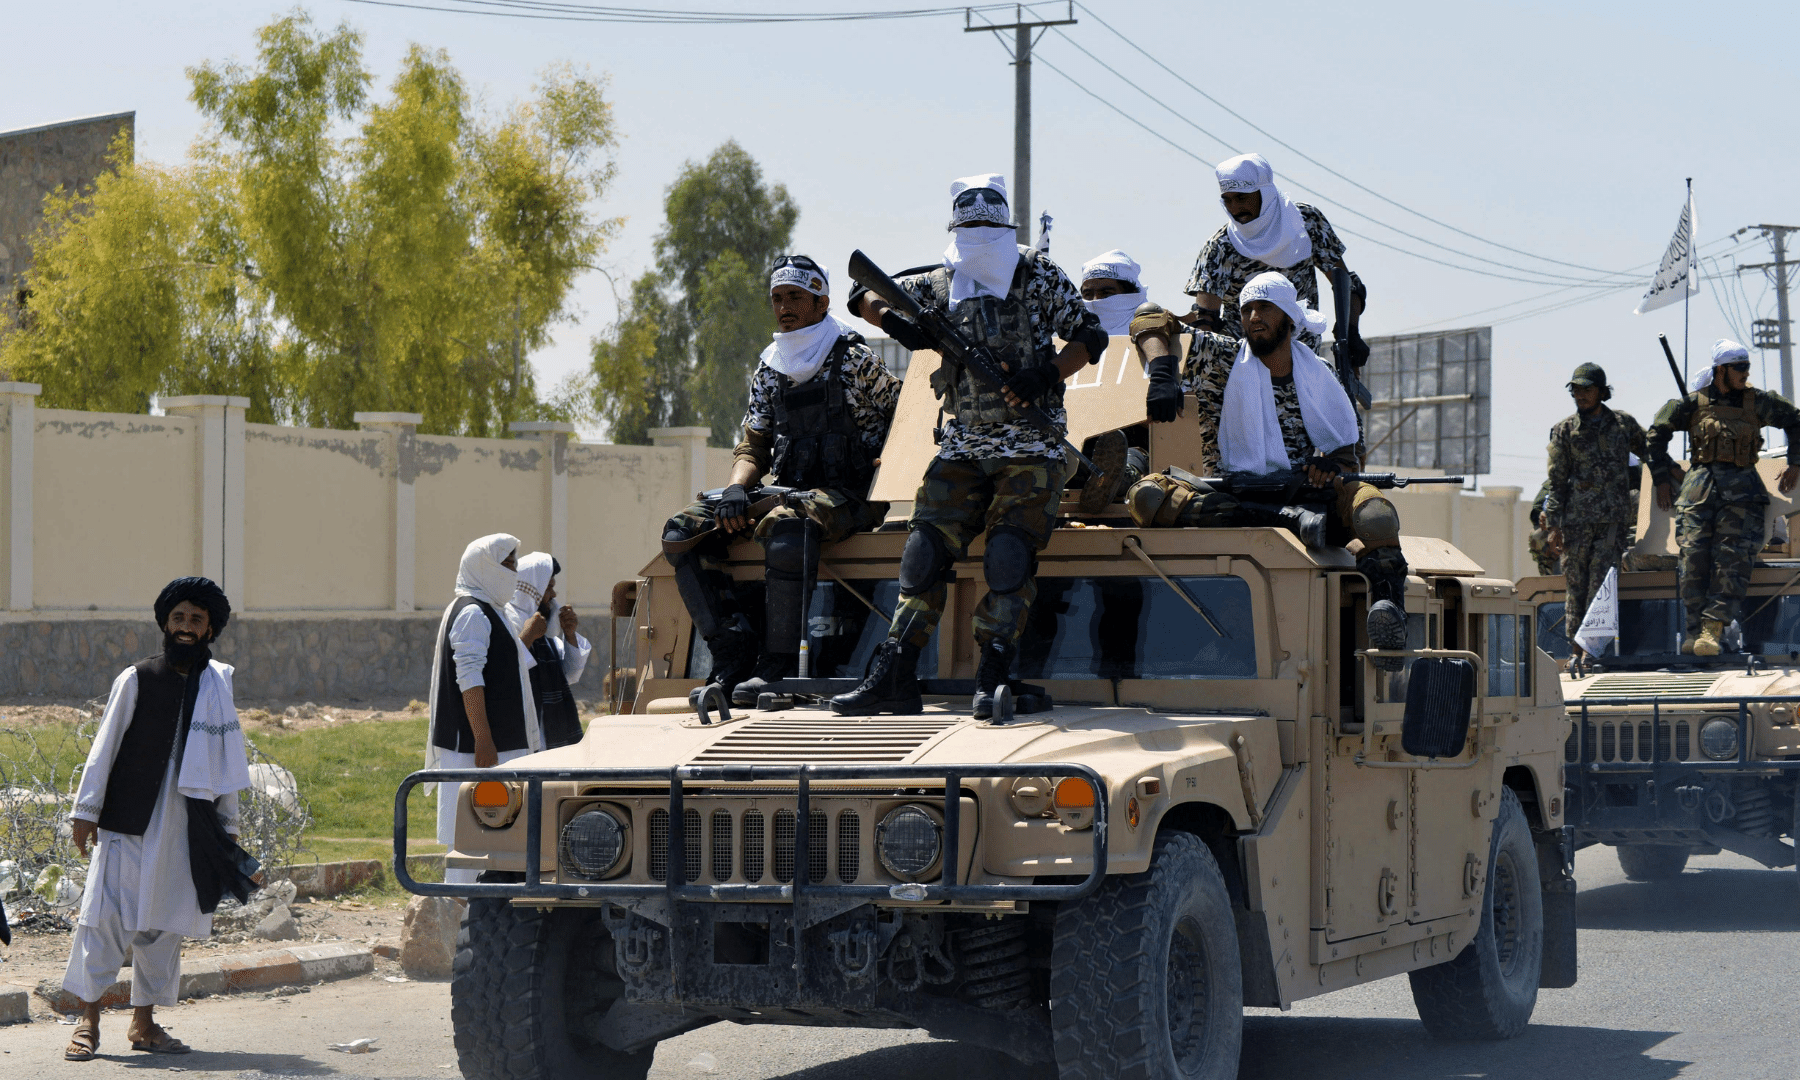 UN warns of food crisis, Taliban parades seized weapons